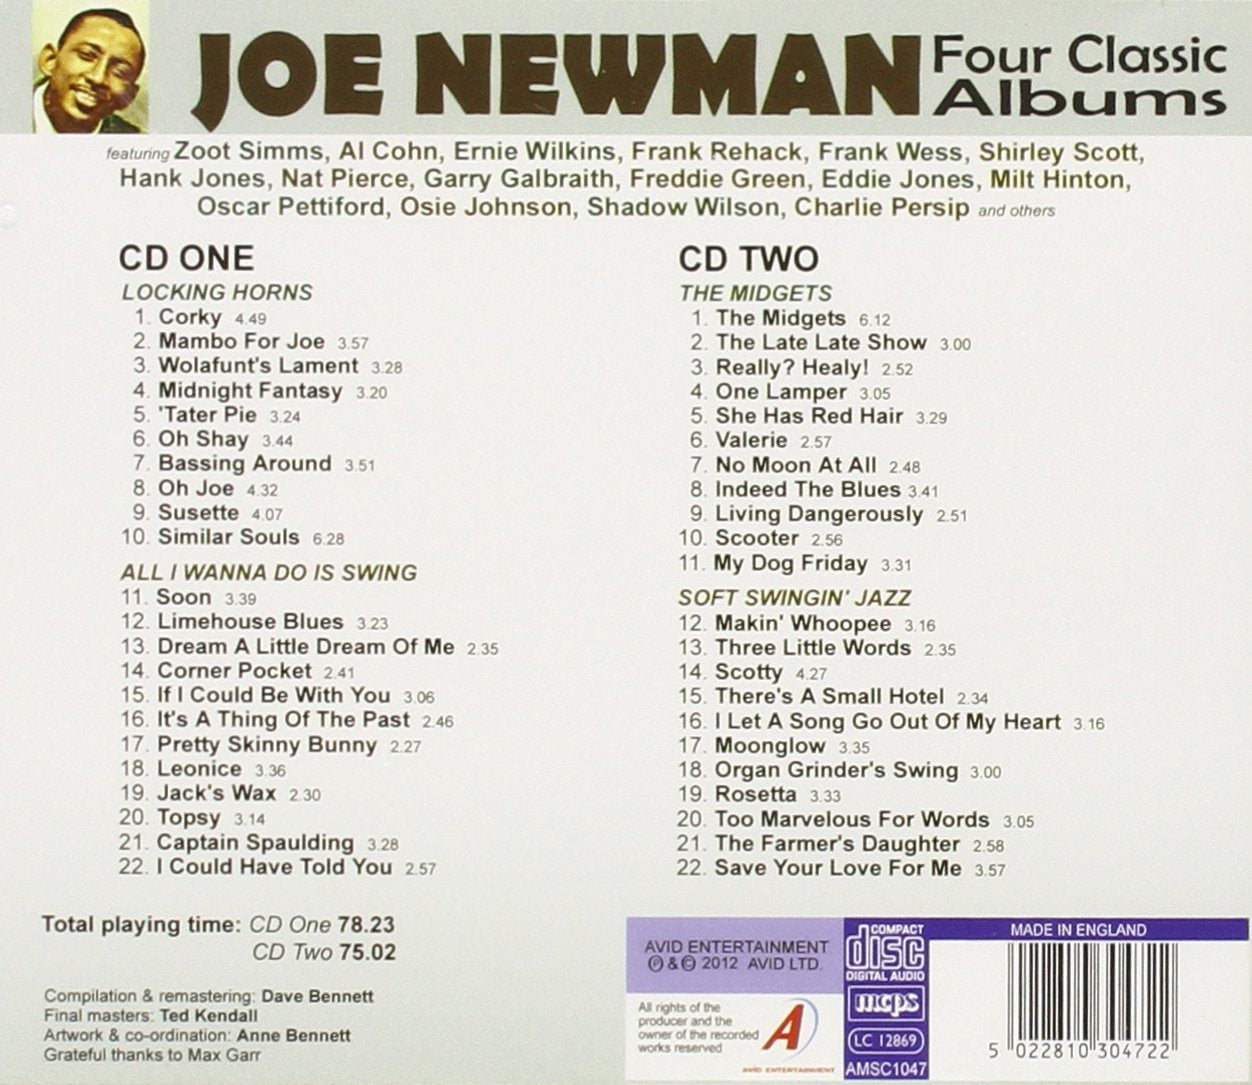 JOE NEWMAN: FOUR CLASSIC ALBUMS (LOCKING HORNS / ALL I WANNA DO IS SWING / THE MIDGETS / SOFT SWINGIN’ JAZZ) (2CD)